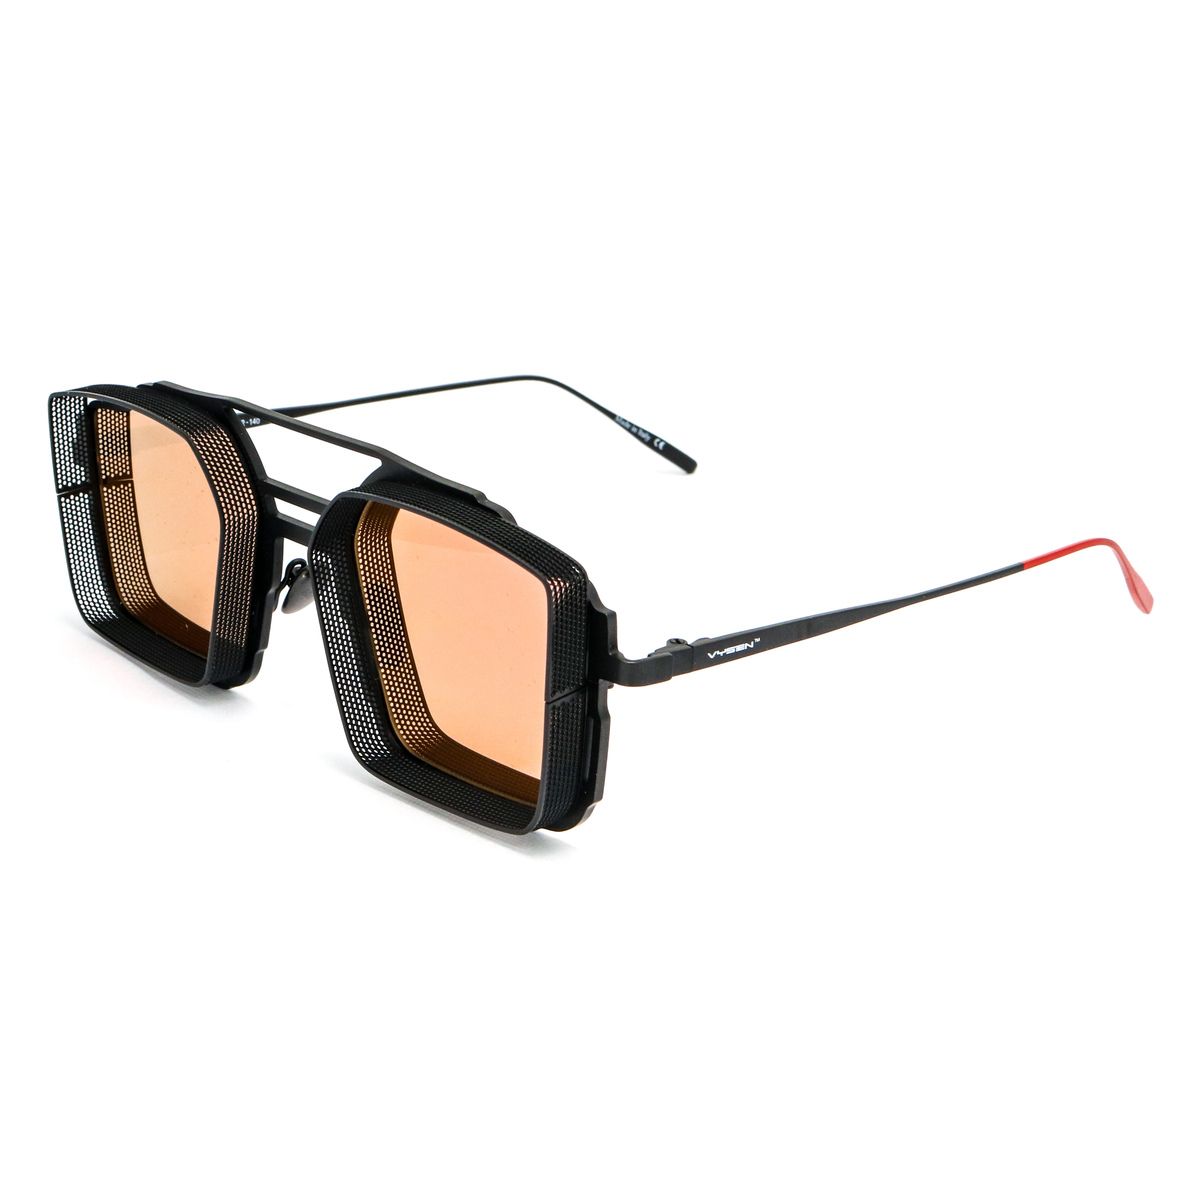 LUIGI Square Sunglasses L2 - size 52